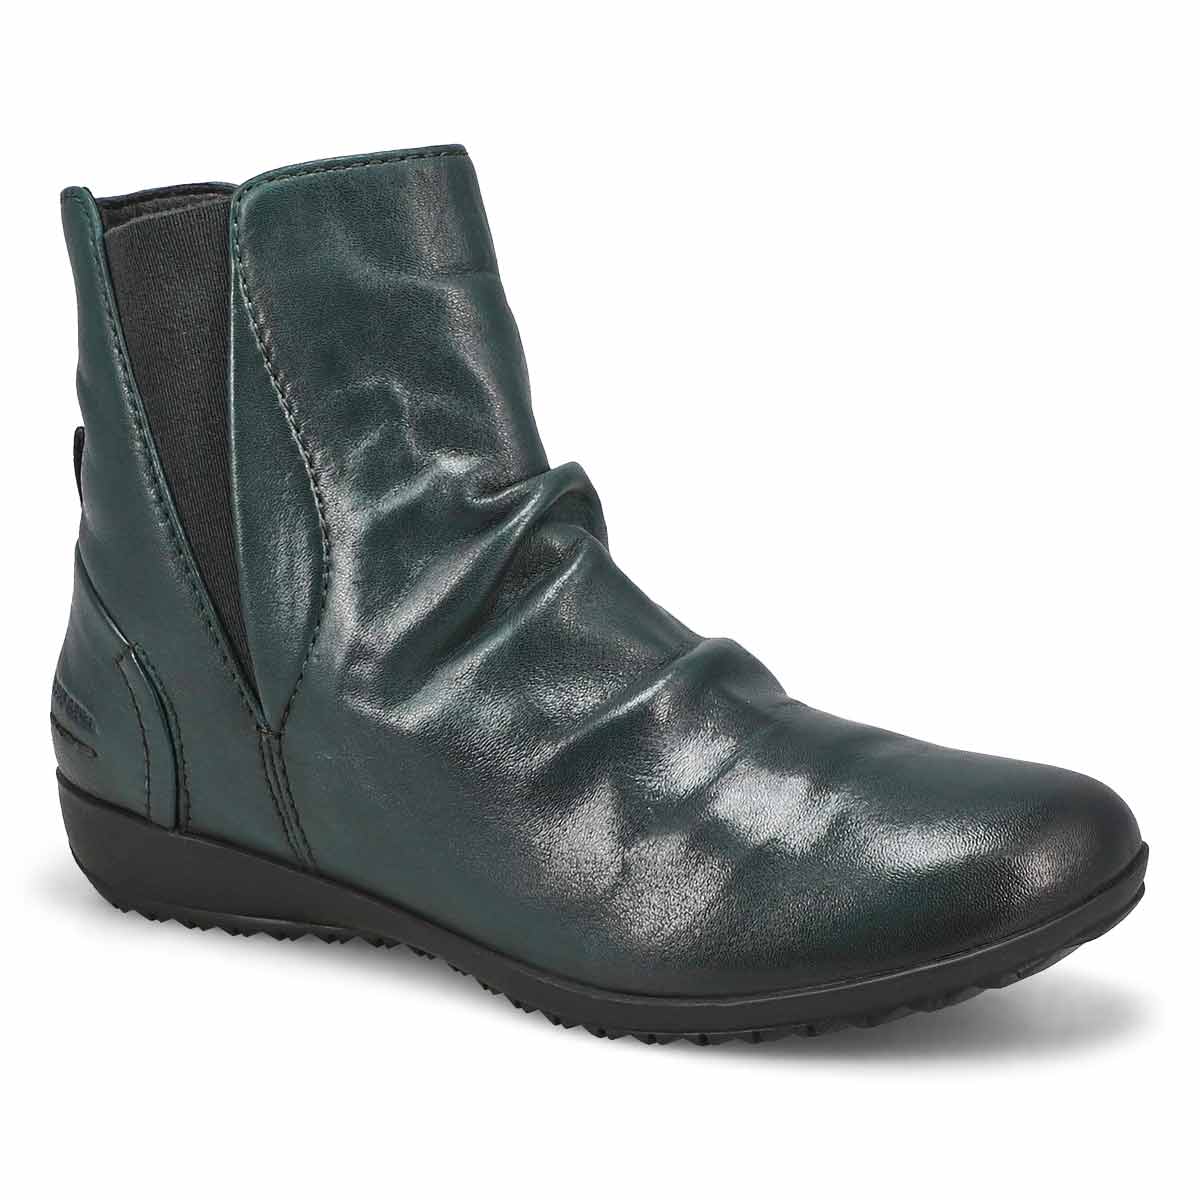 Josef Seibel Women's Naly 66 Leather Ankle Bo | SoftMoc.com